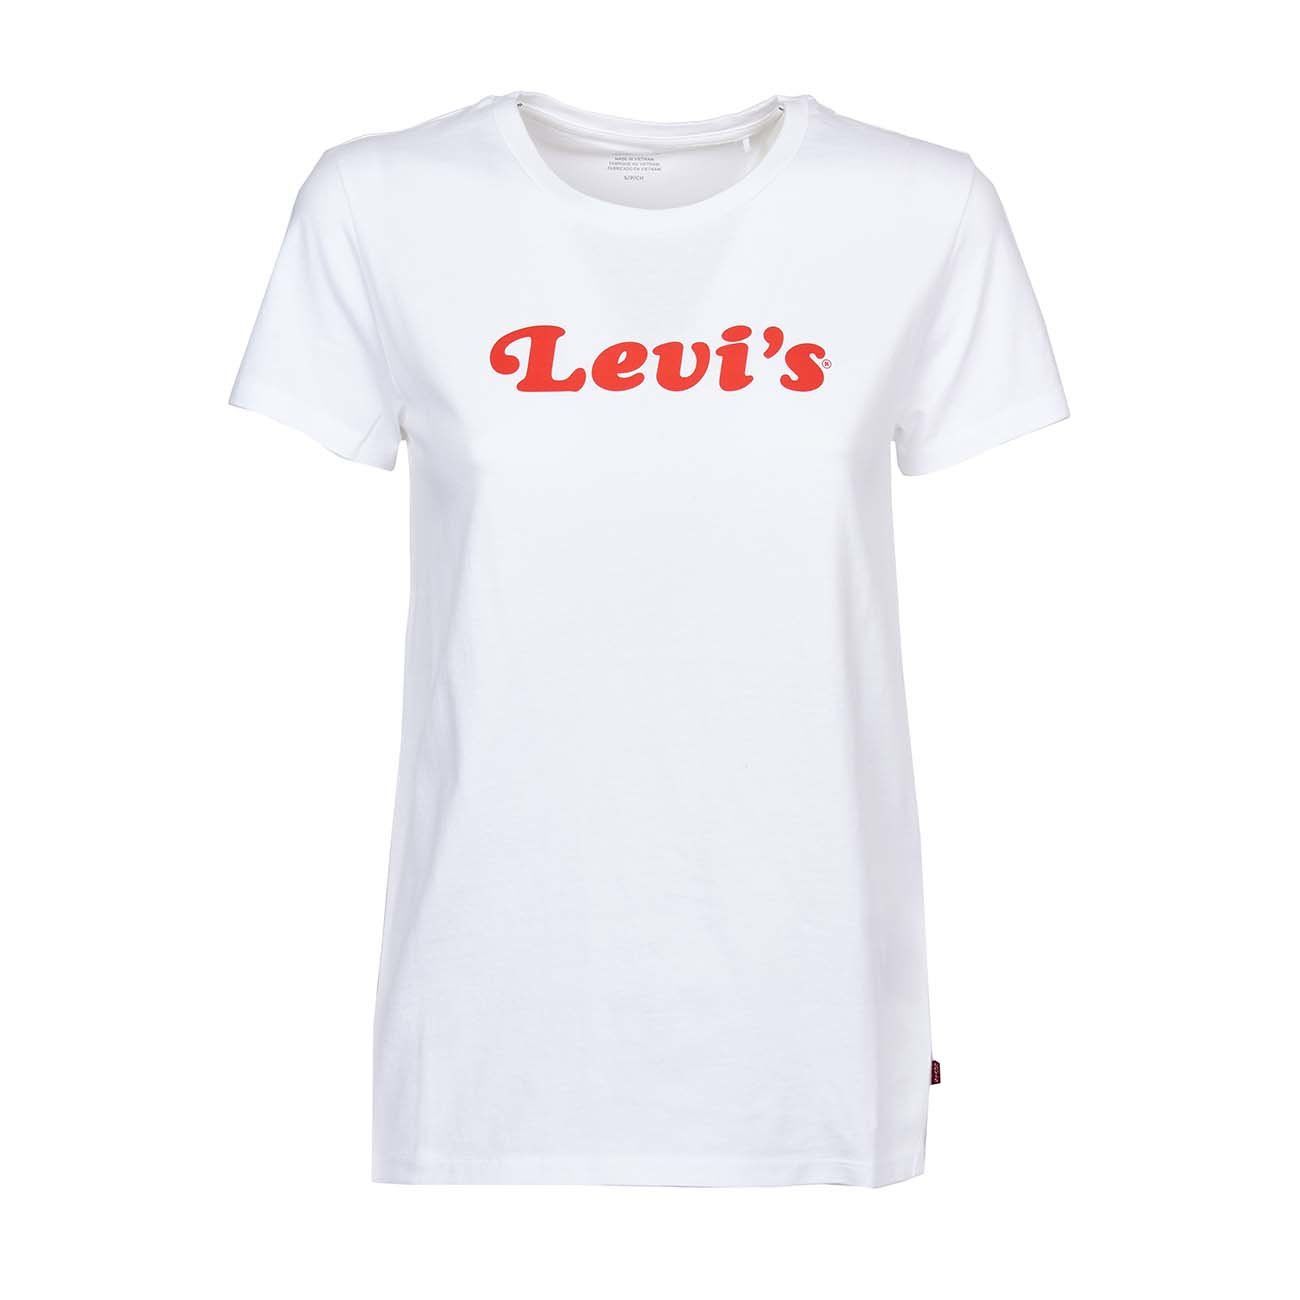 levis white t shirt for women